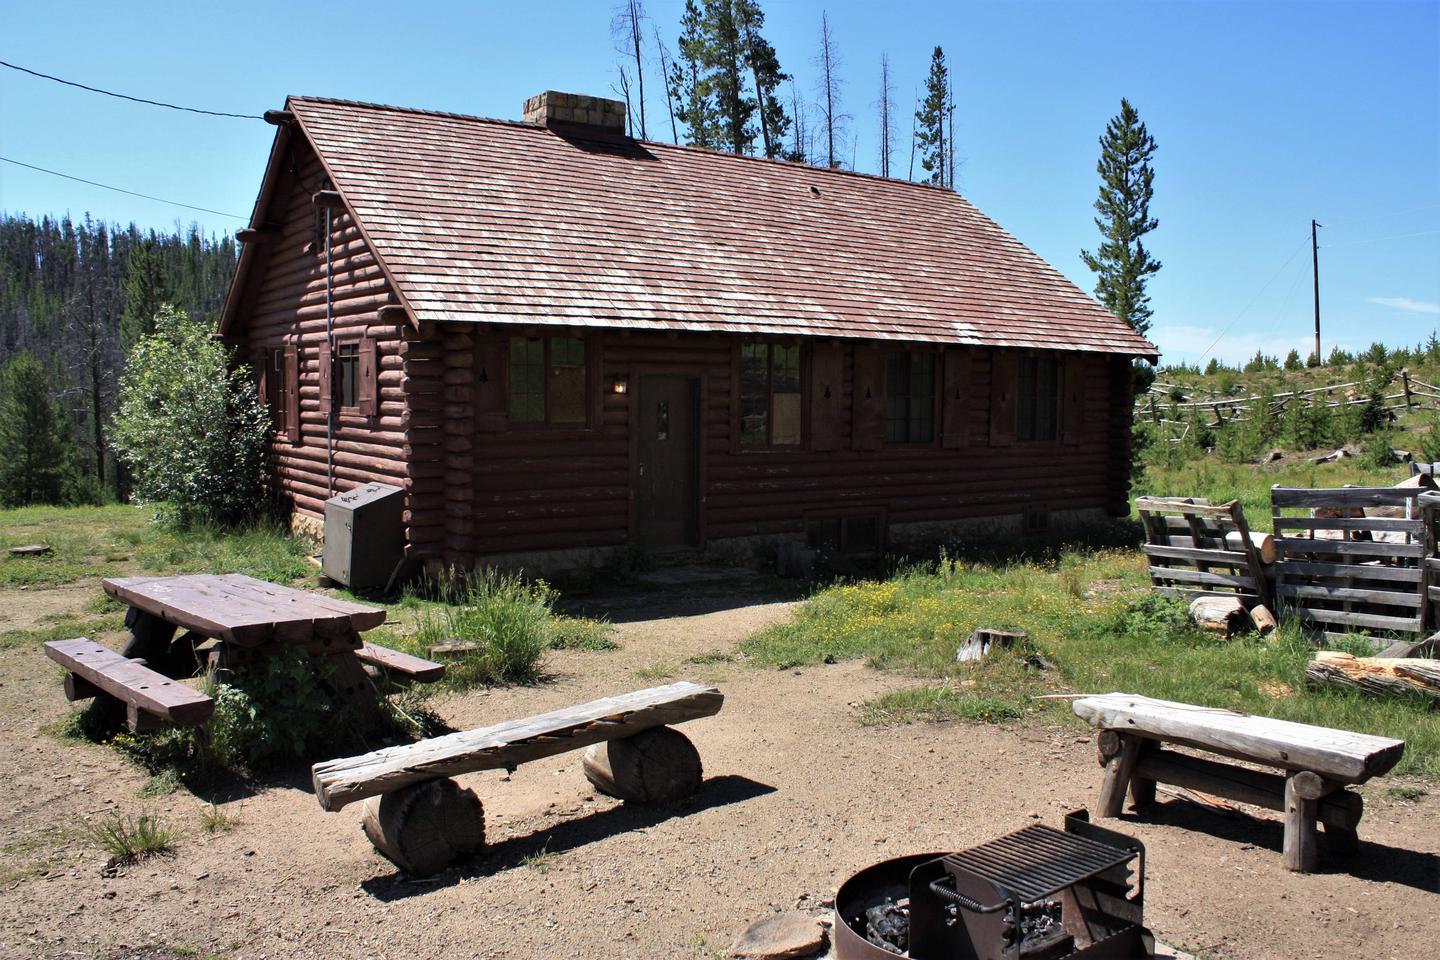 Keystone Ranger Station back entrance, picnic area, and fire pit